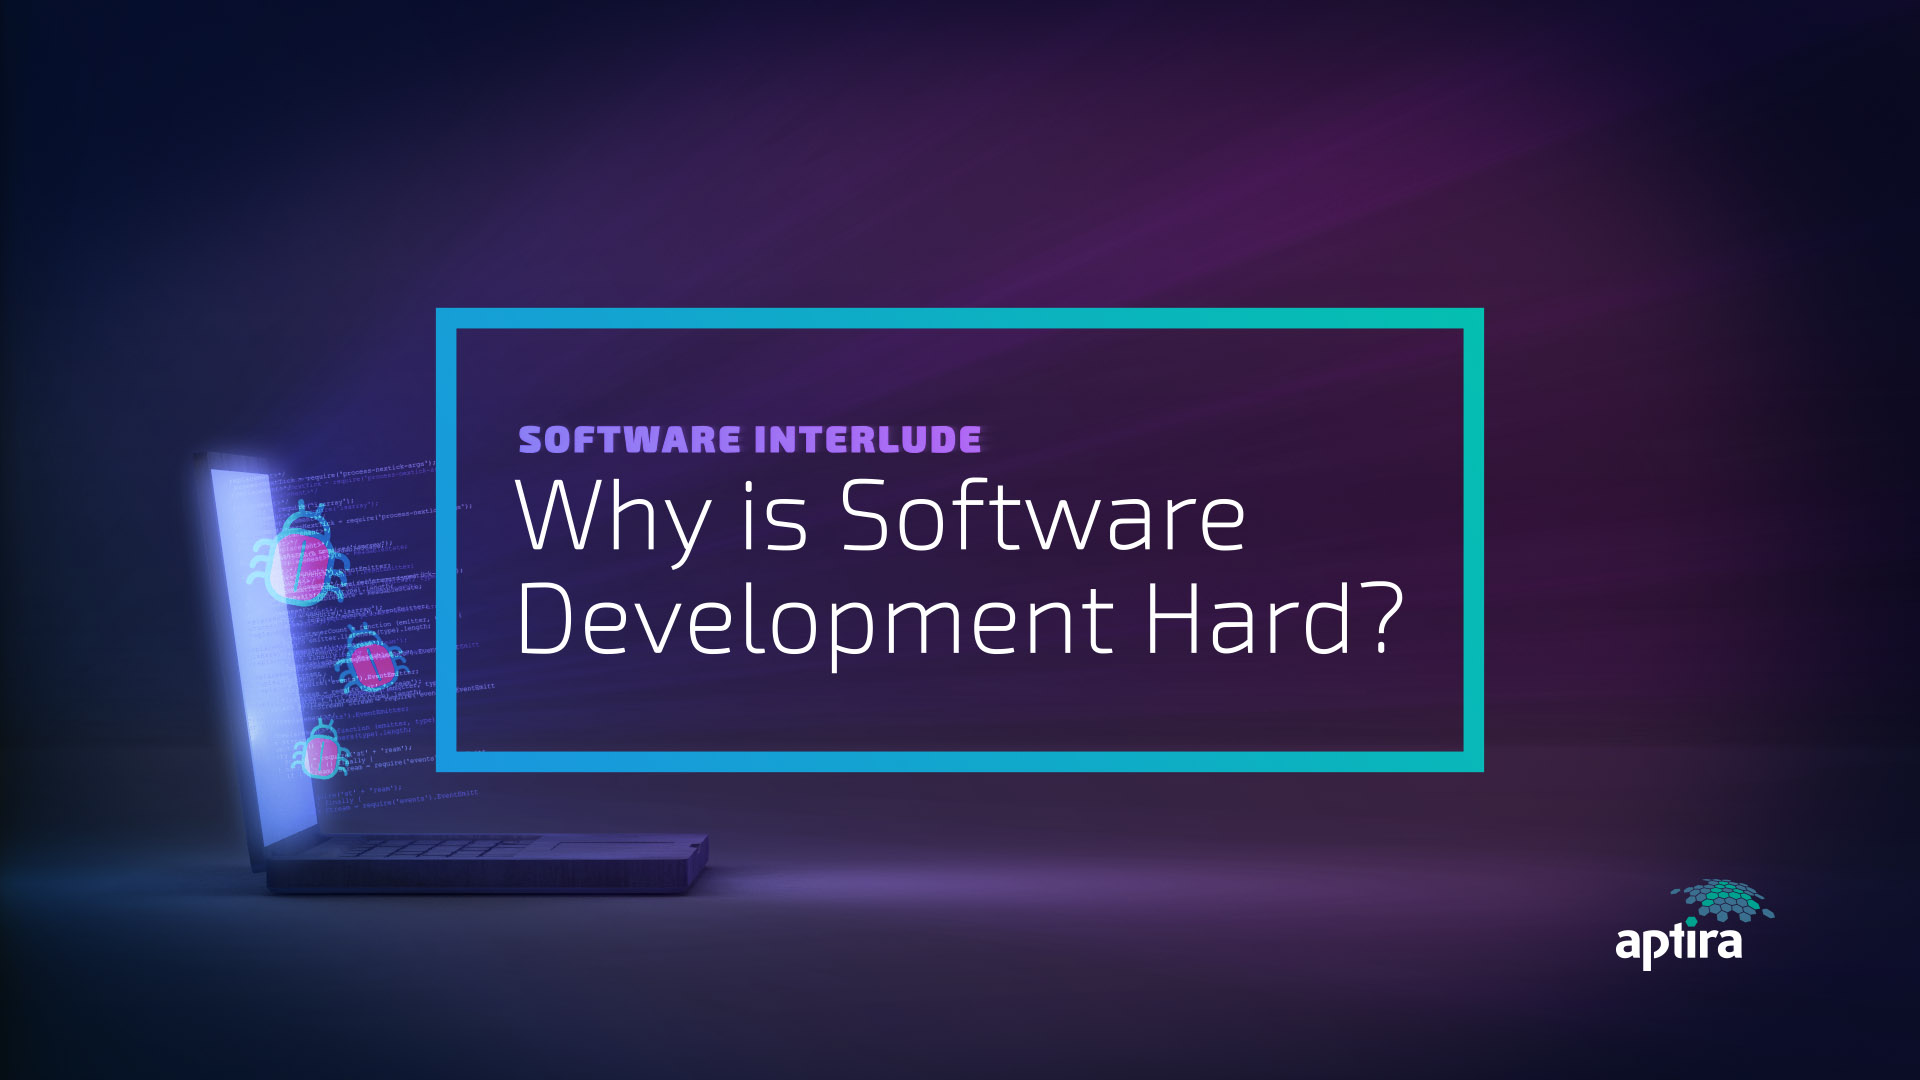 Aptira Open Networking Software Interlude - Why is Software Development Hard?